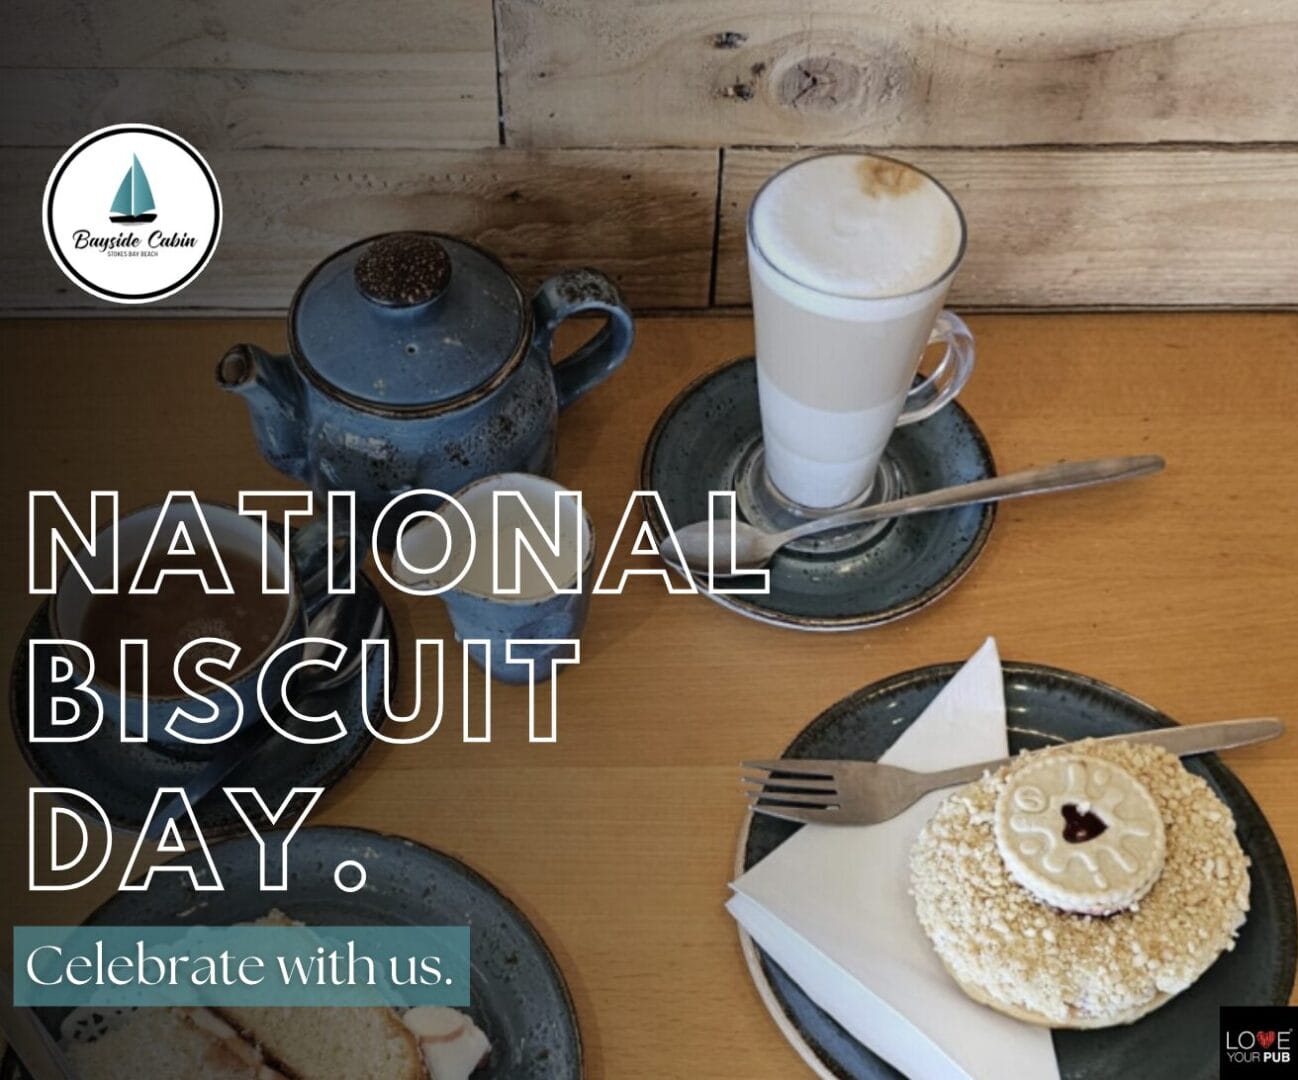 Best Restaurants In Gosport - Celebrate National Biscuit Day At Bayside Cabin !